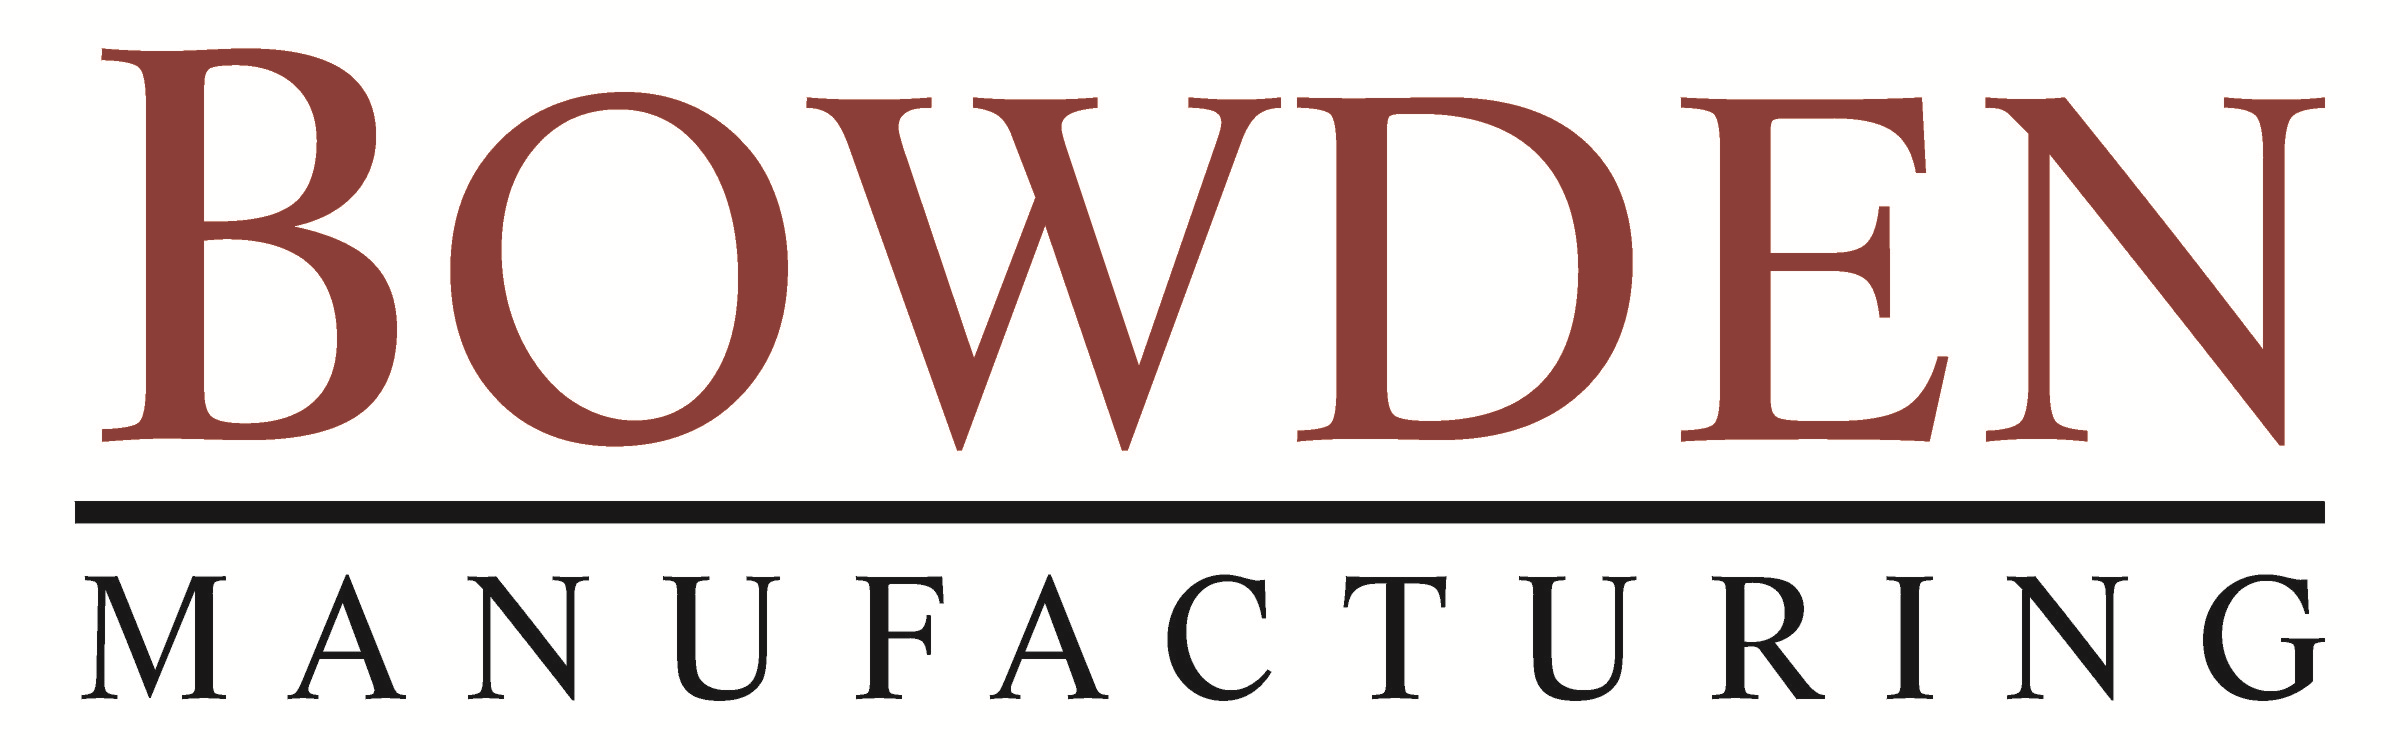 Bowden Manufacturing Company Logo